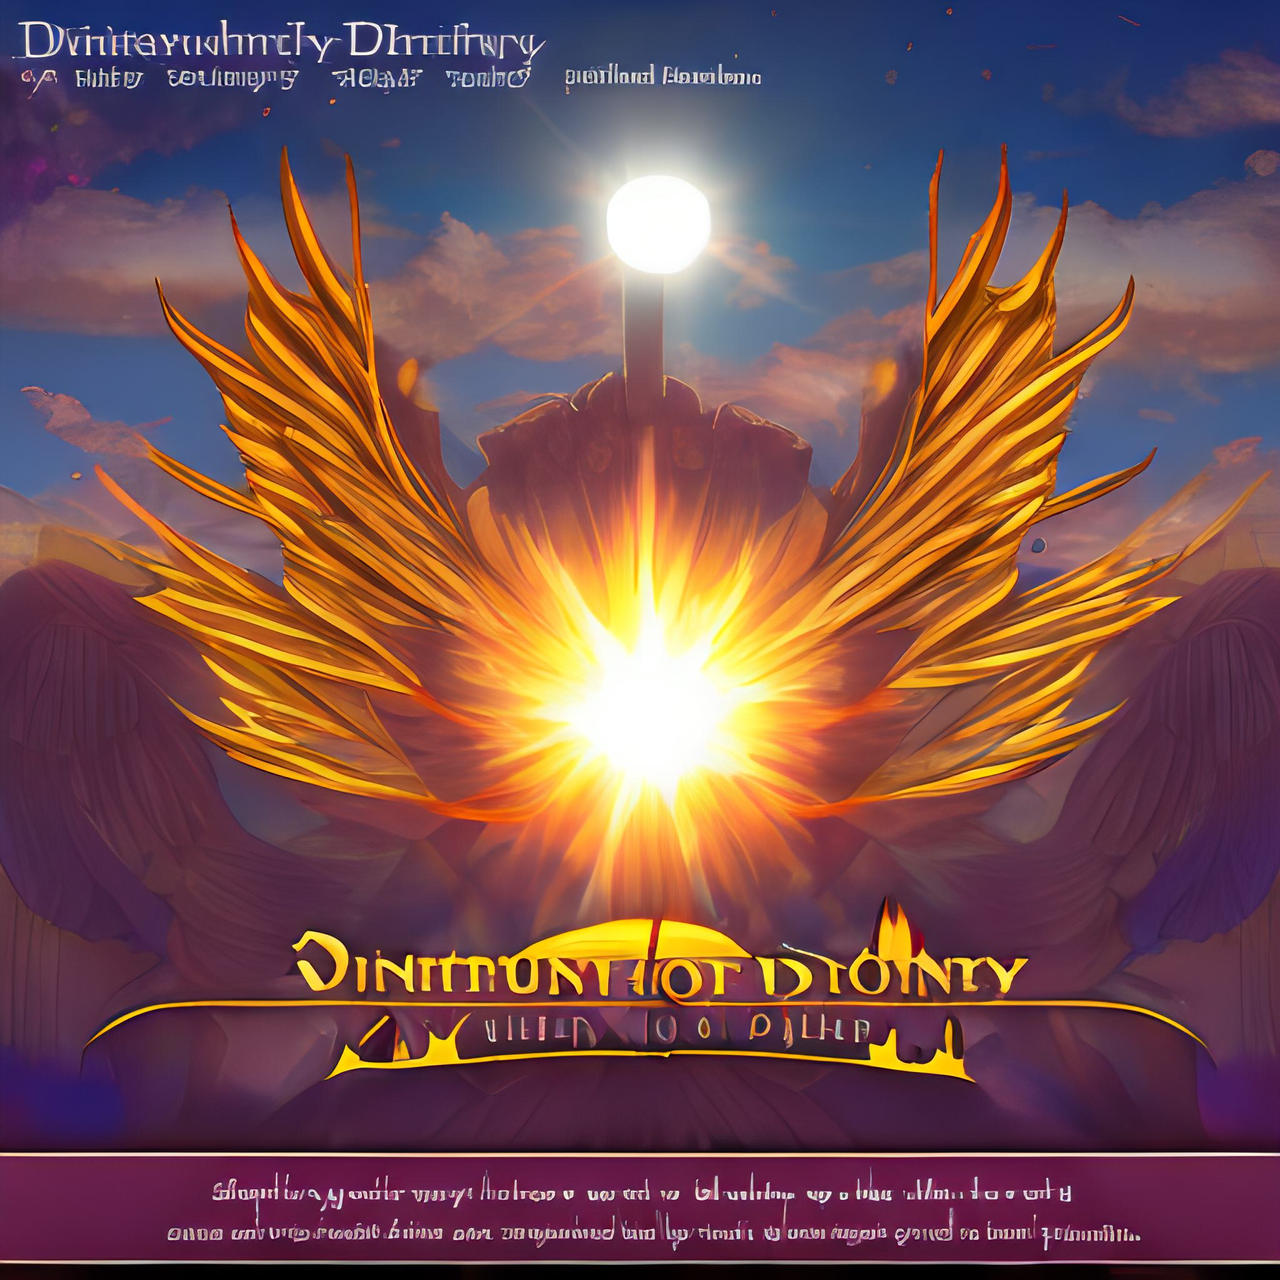 Sunlight of Divinity by PhattyPhan5 on DeviantArt